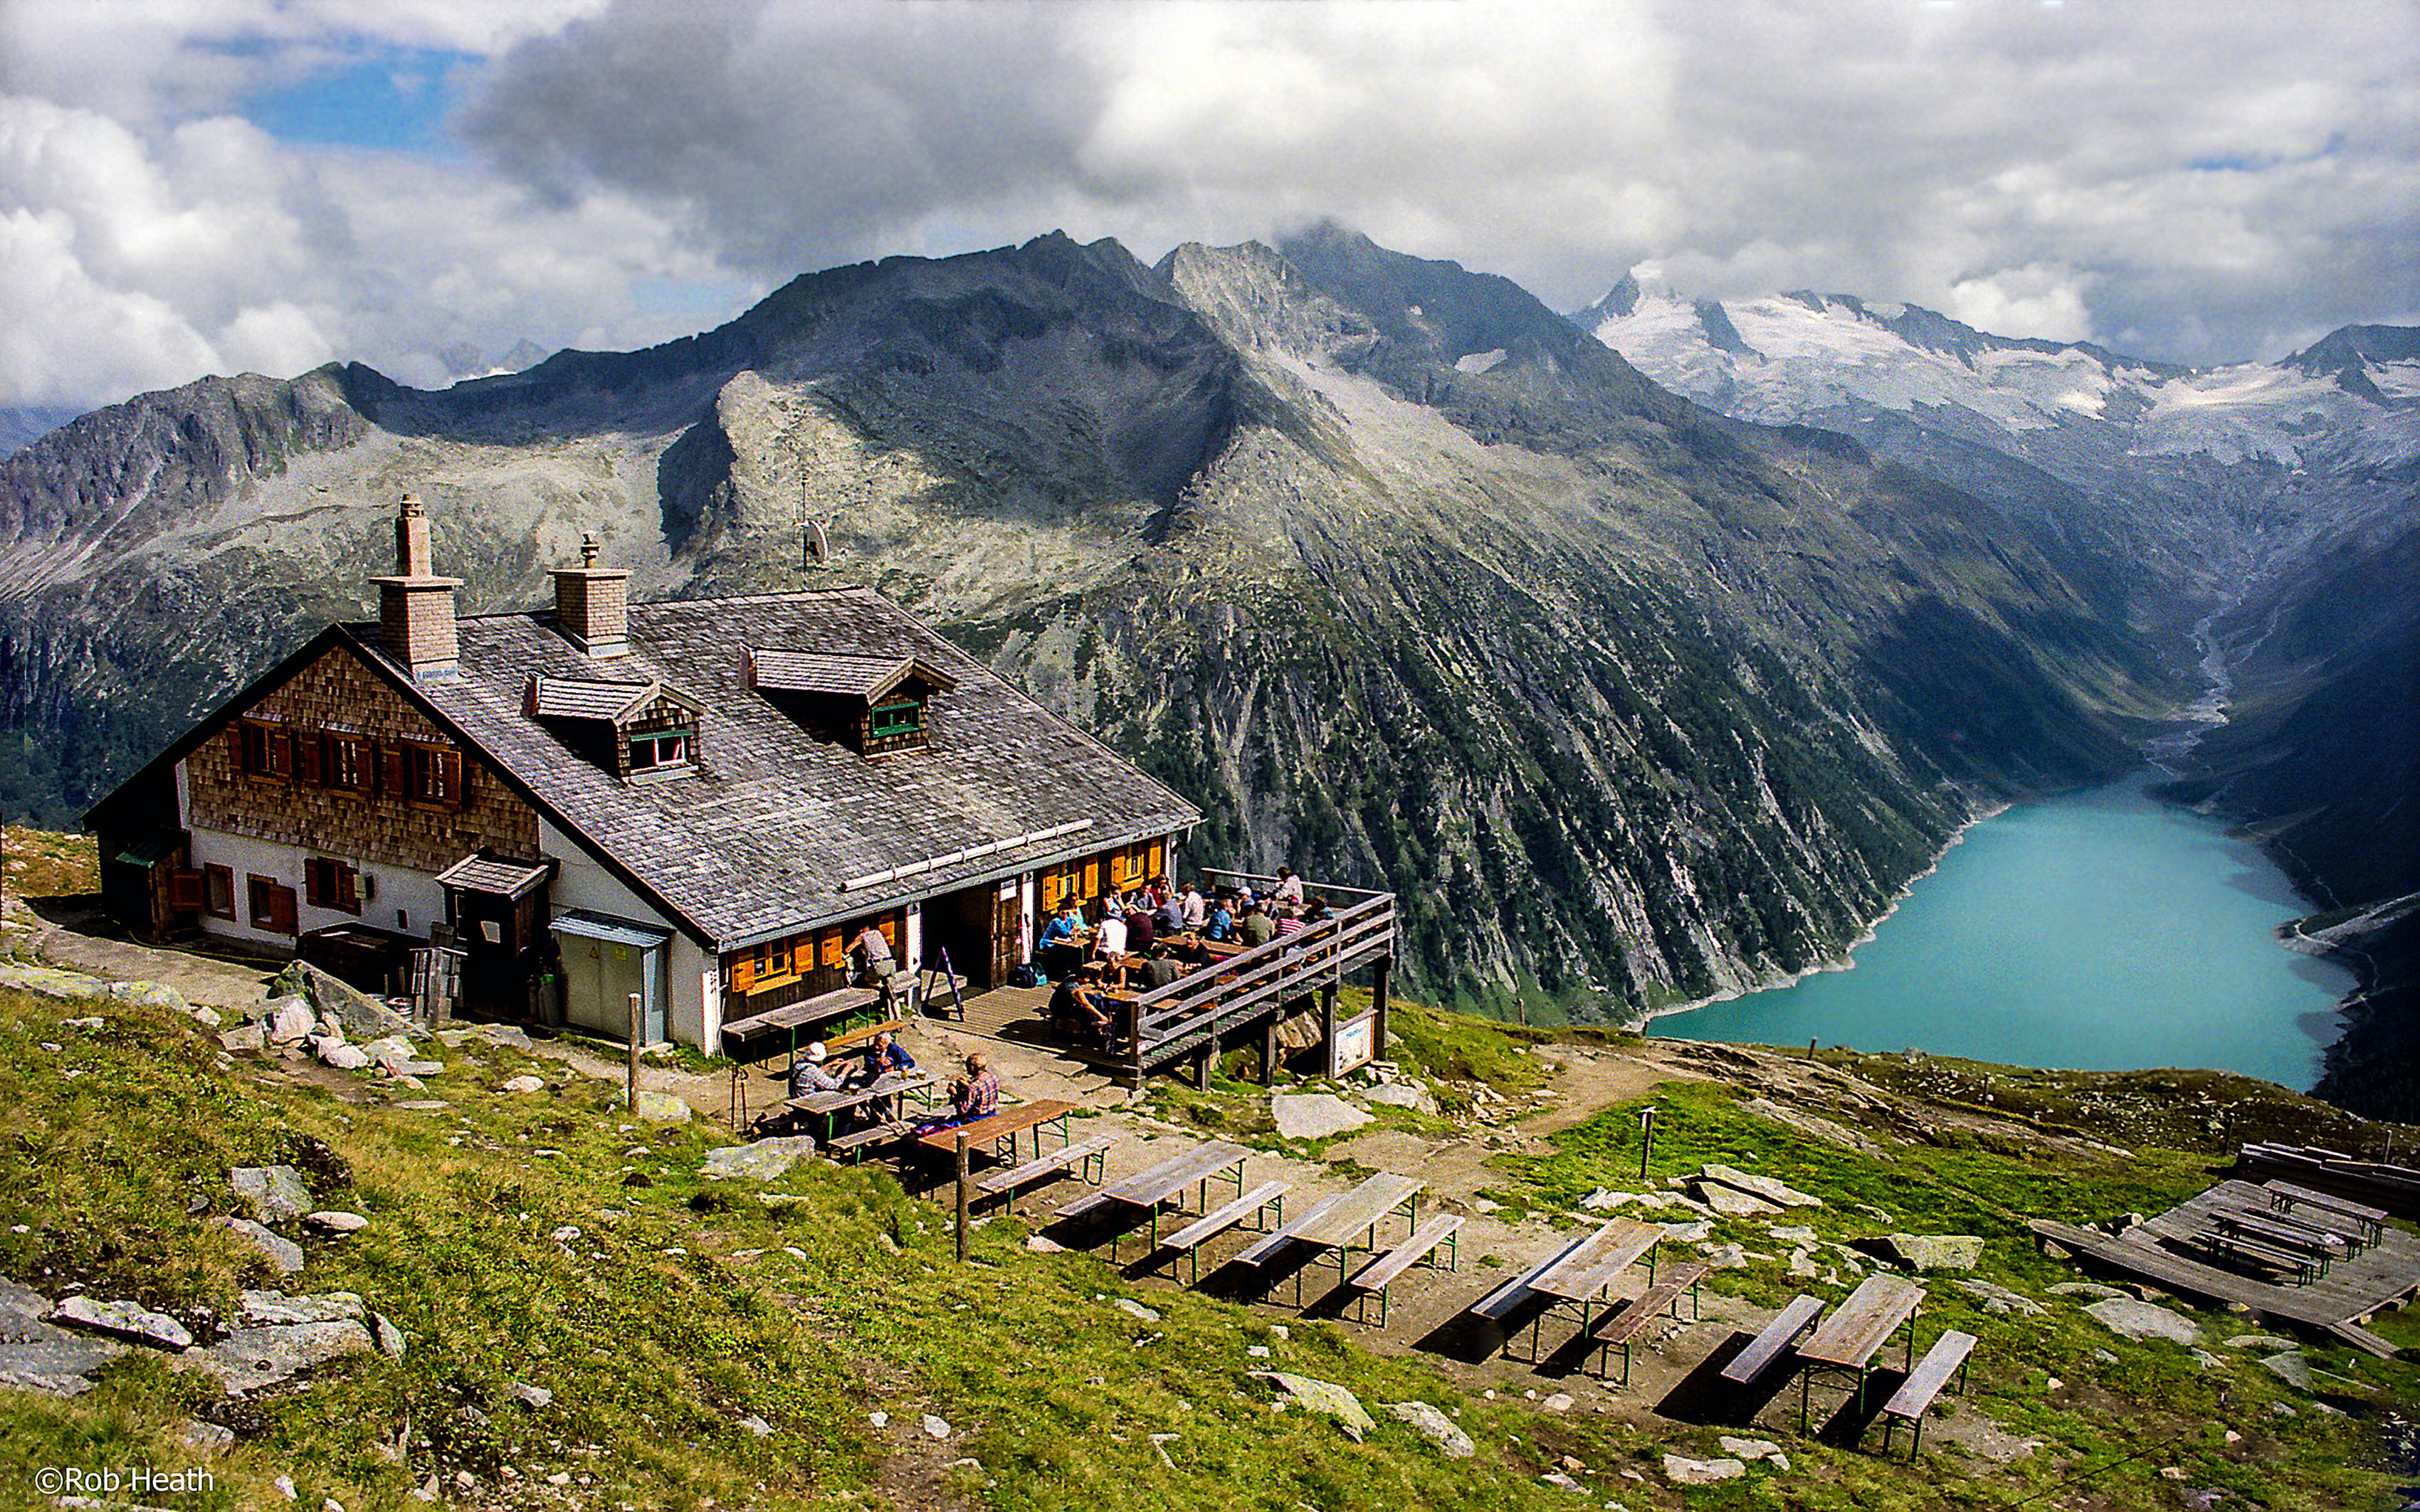 Inn with Amazing View in Tyrol Austria by Robert J Heath